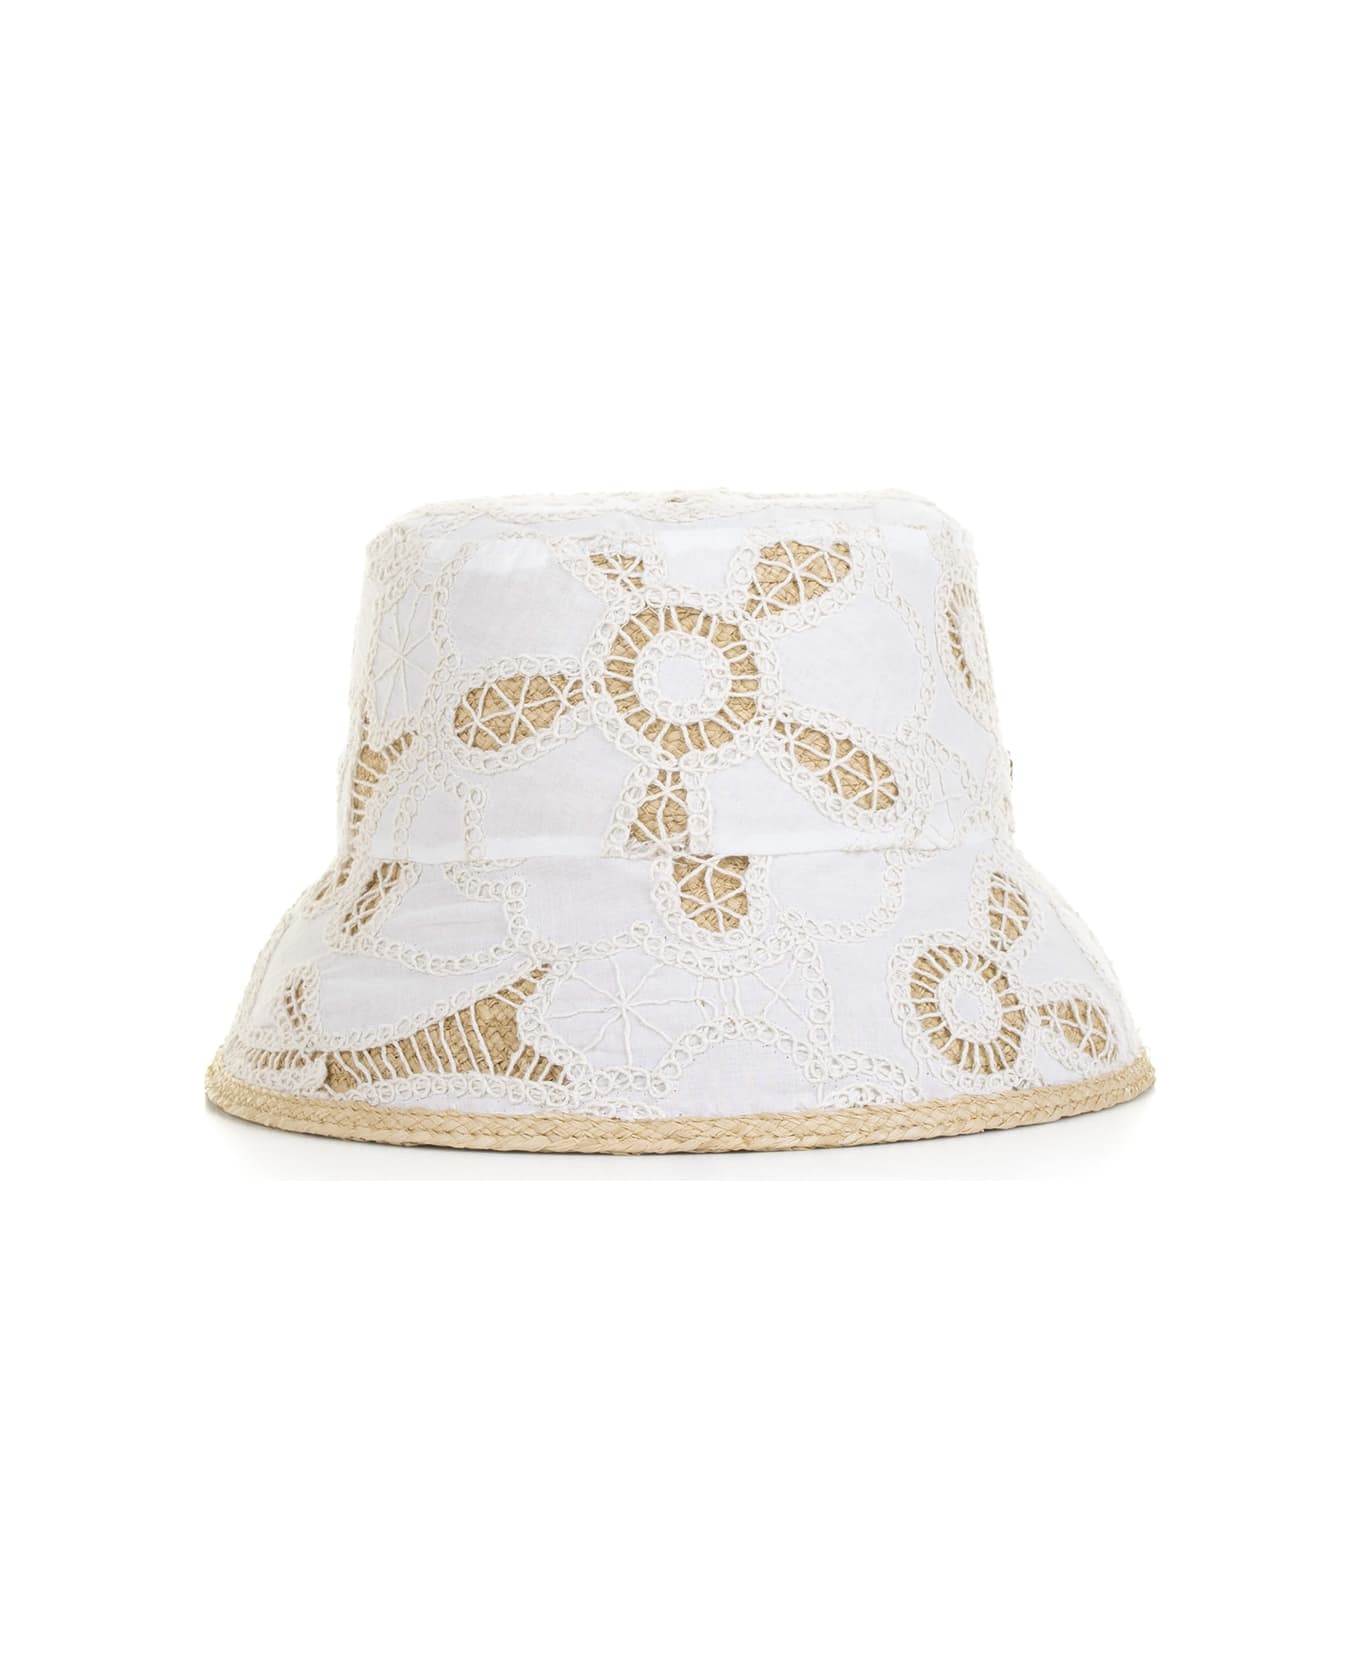 Helen Kaminski Hat - OFF WHITE